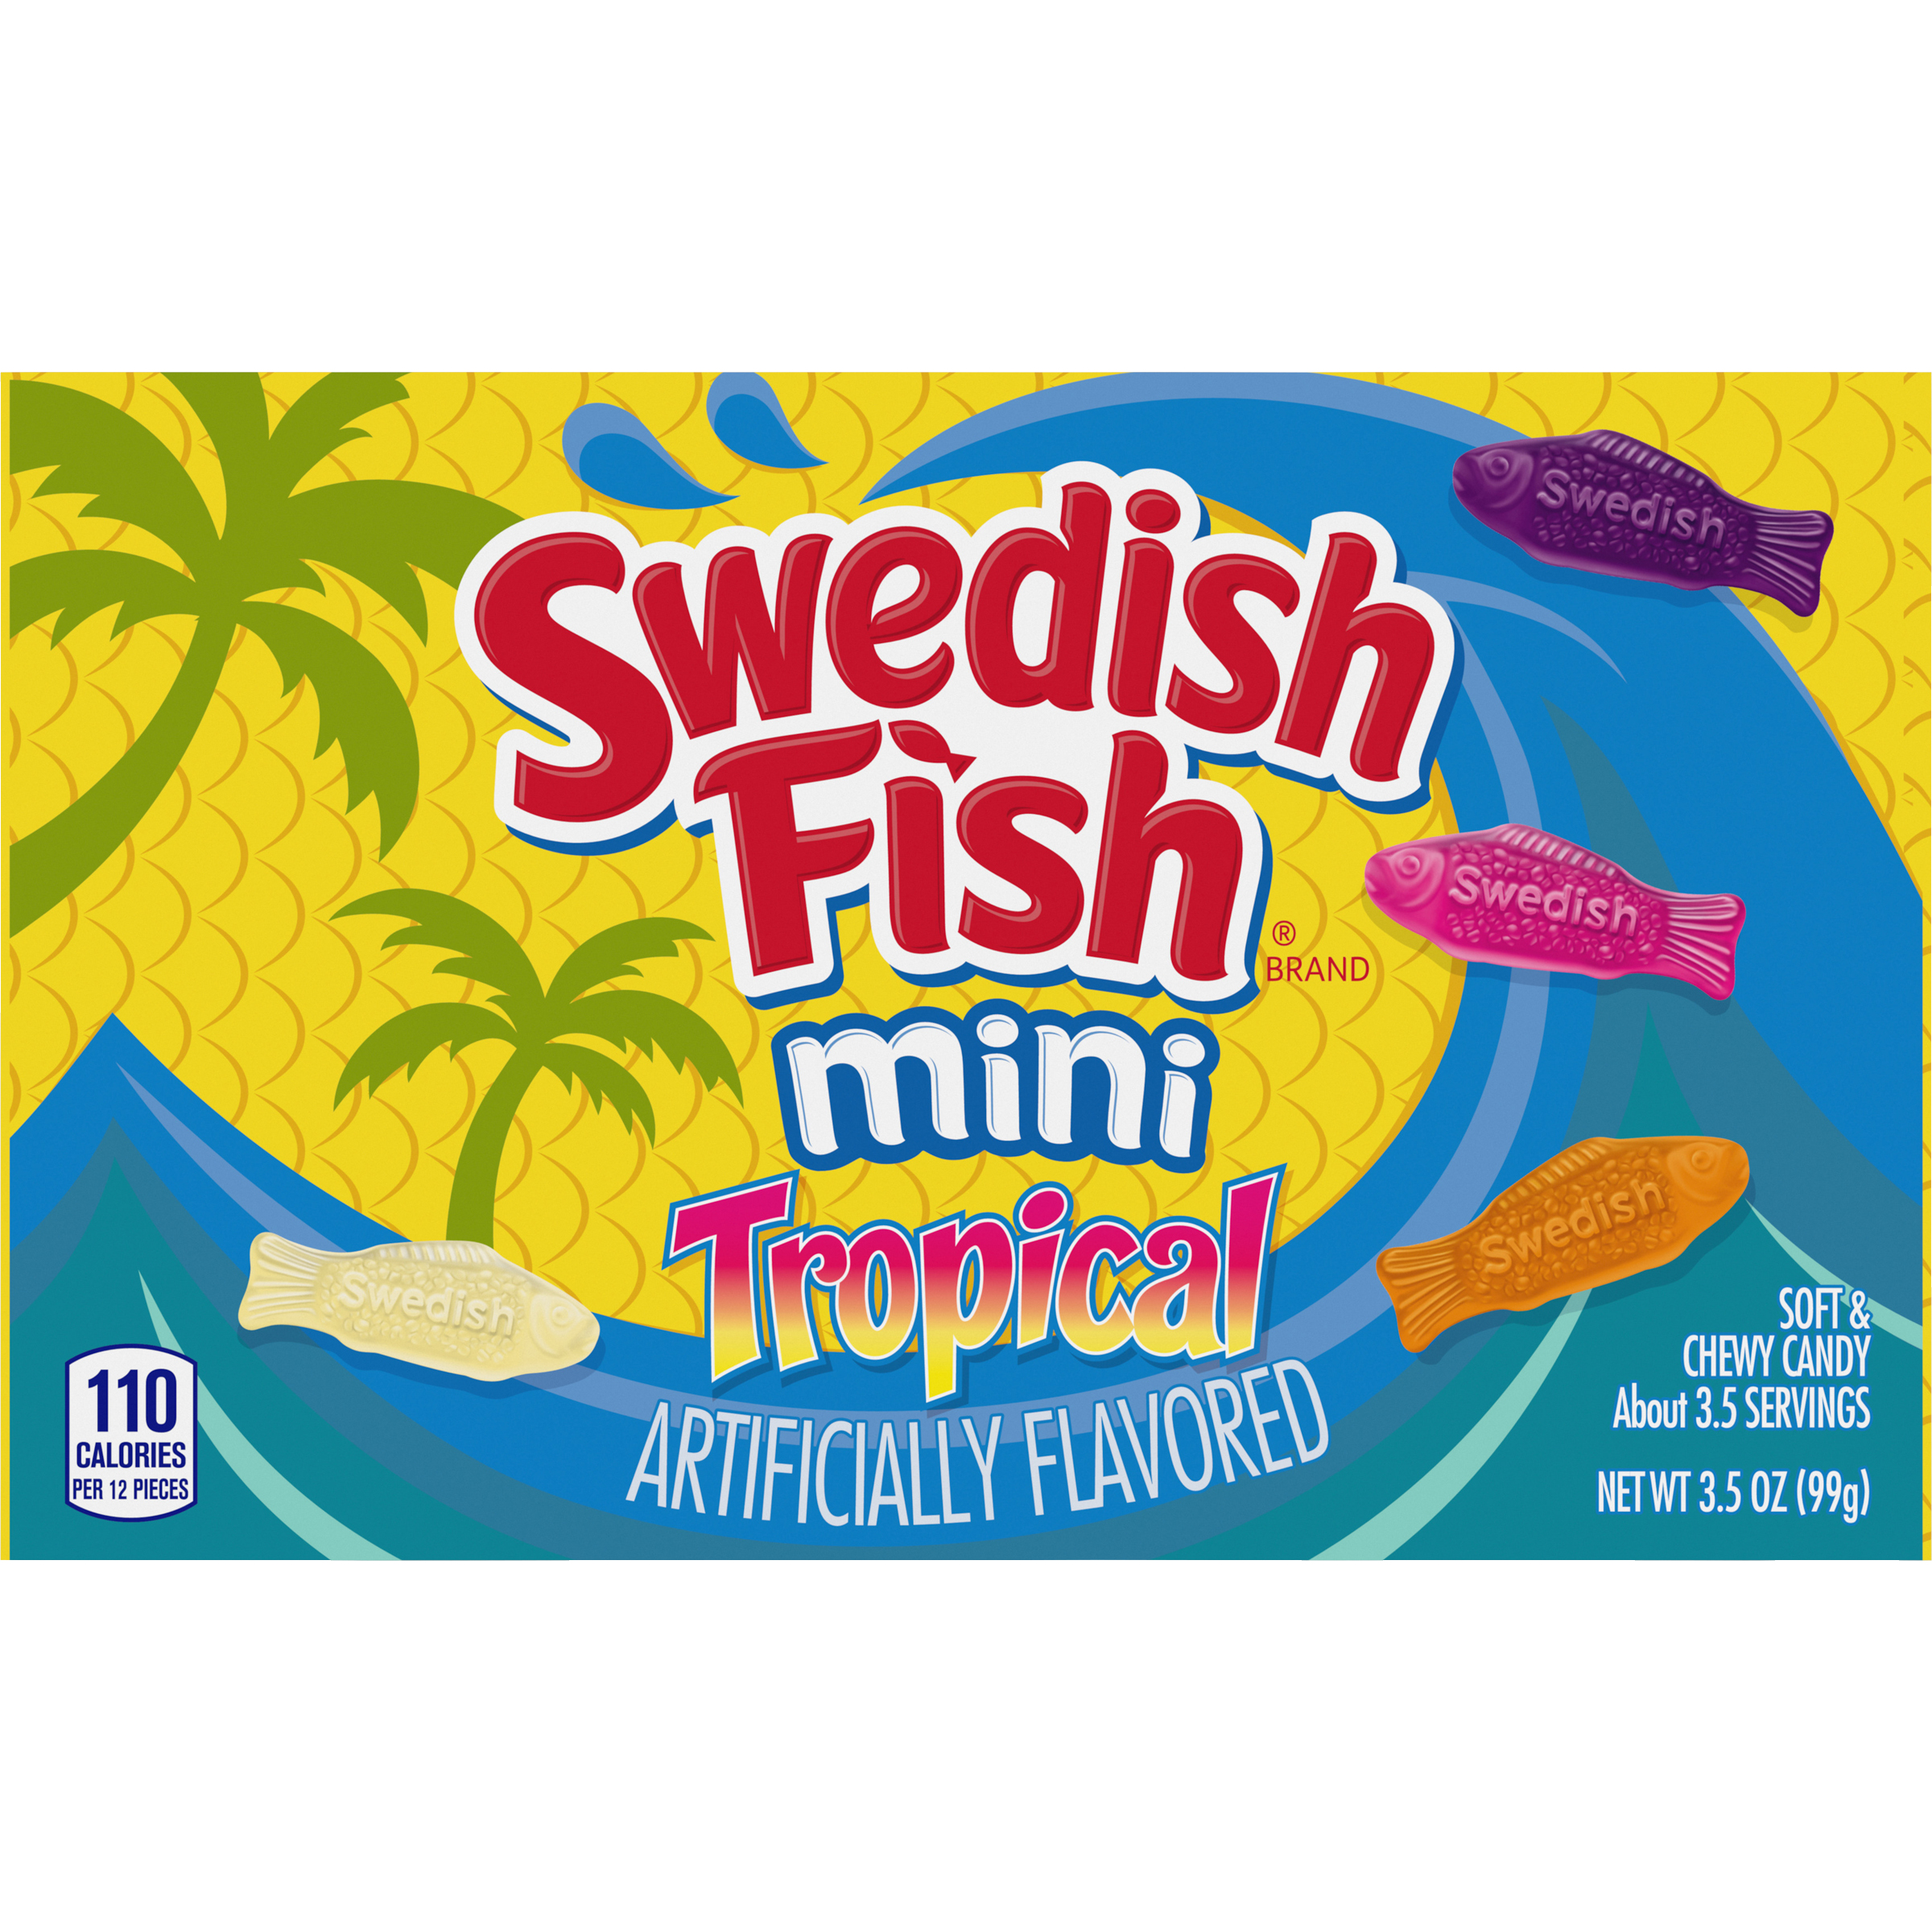 SWEDISH FISH Mini Tropical Soft & Chewy Candy, 3.5 oz-1